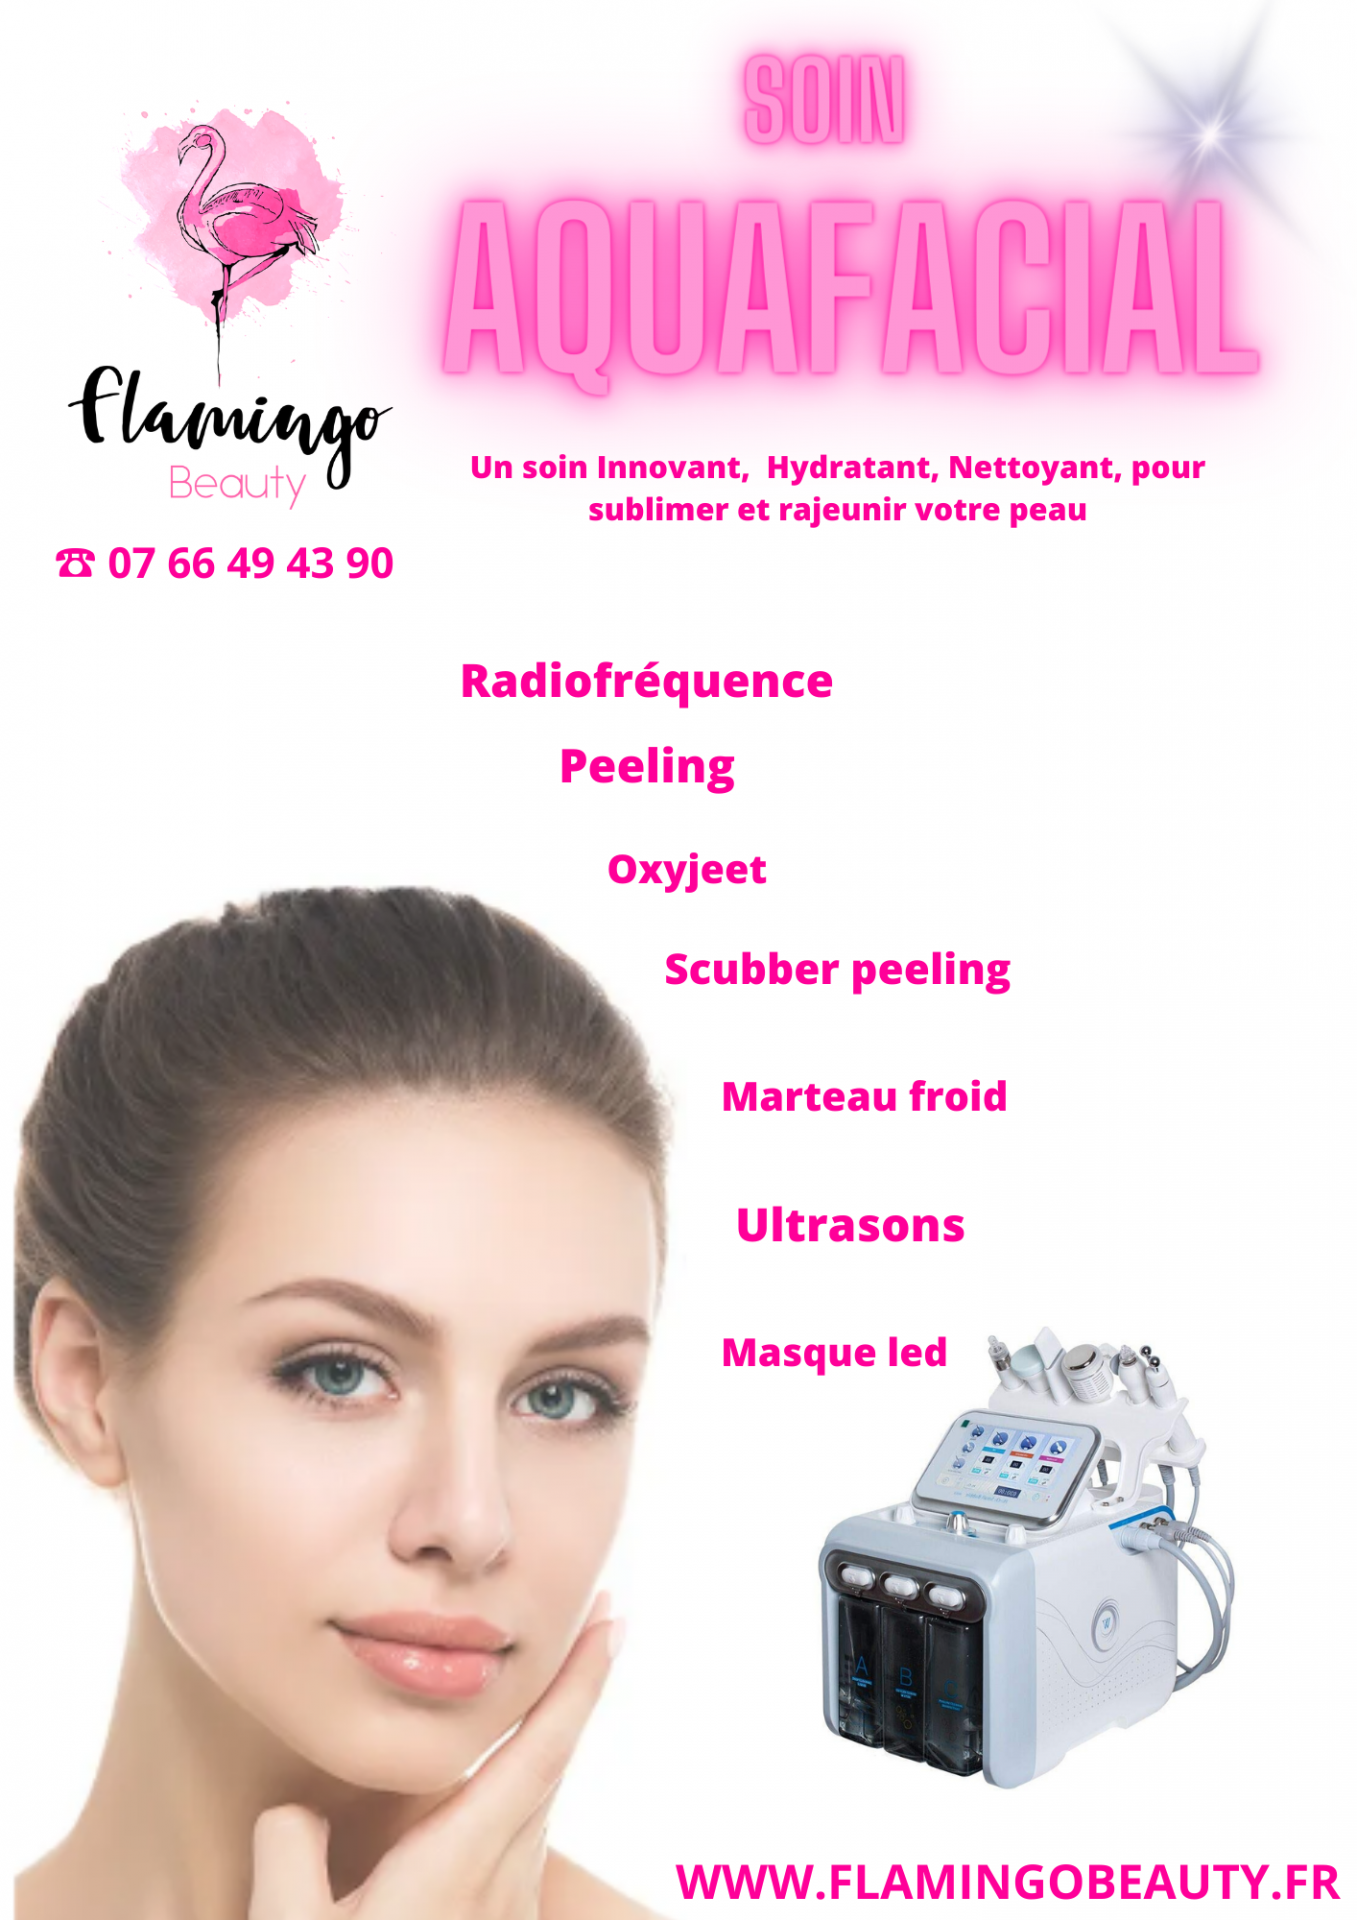 Aquafacial soin visage nettoyage profond Nice